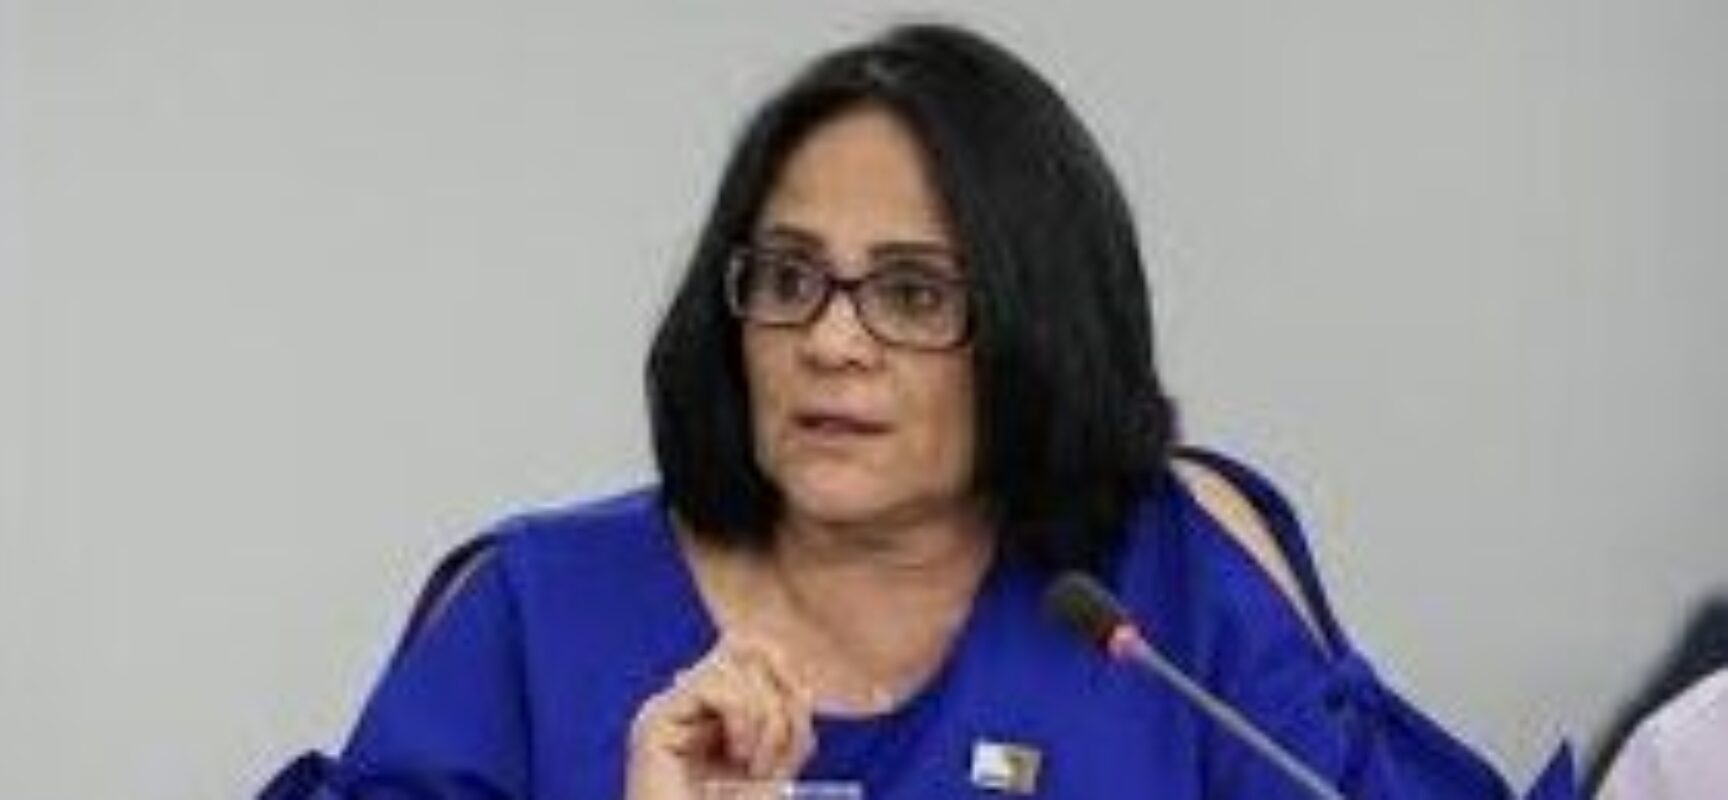 Ministra Damares entregará veículos a 17 conselhos tutelares da Bahia